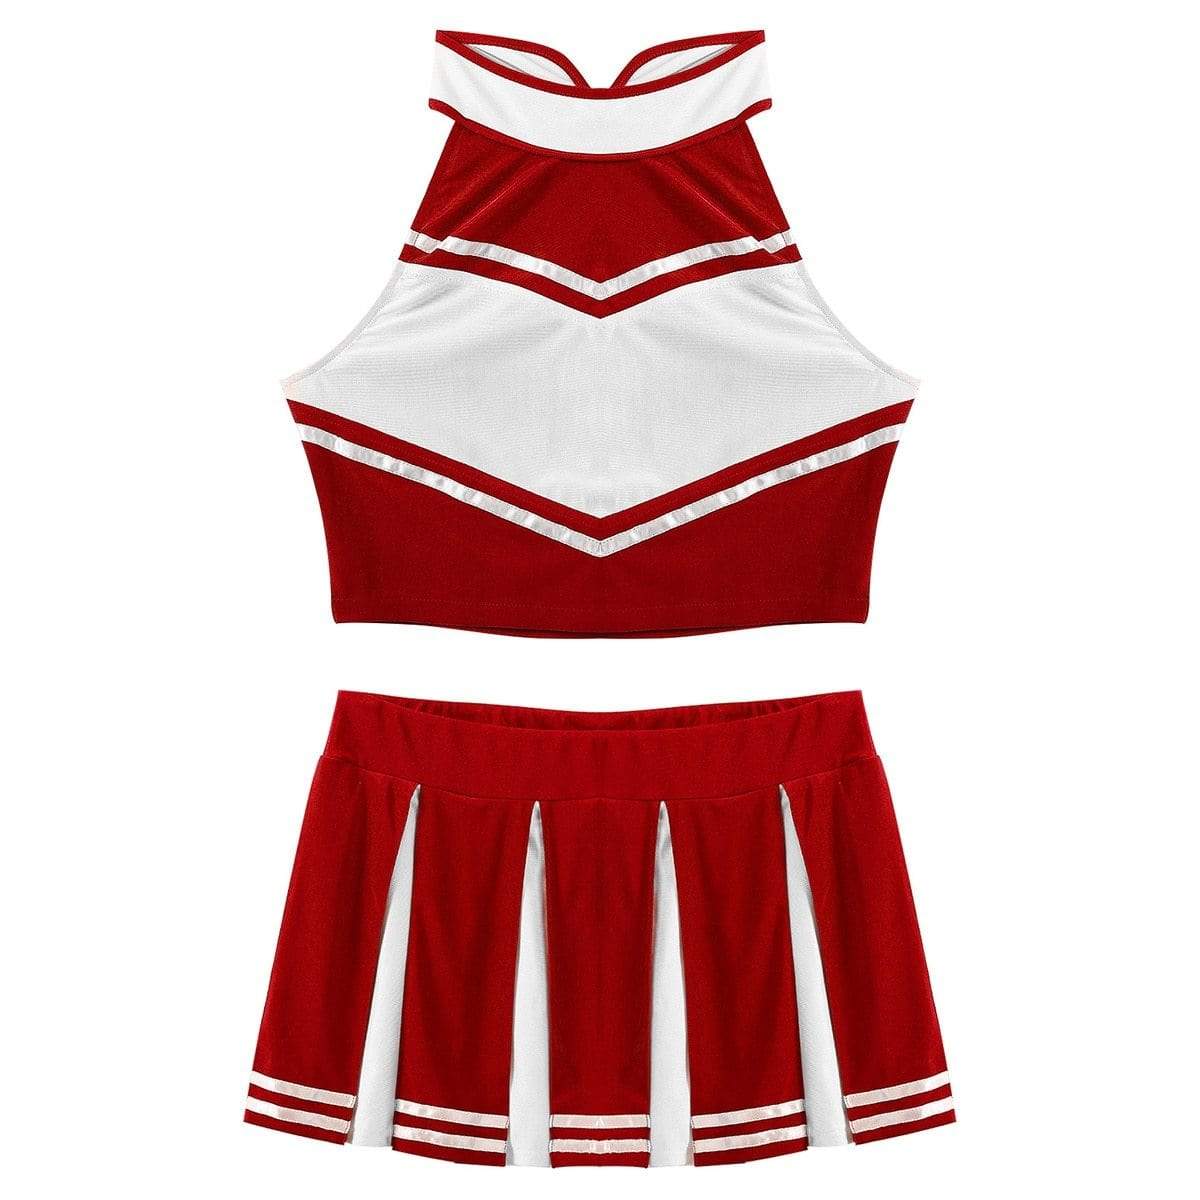 Kinky Cloth 200003986 Red / S Gleeing Cheerleader Costume Uniform